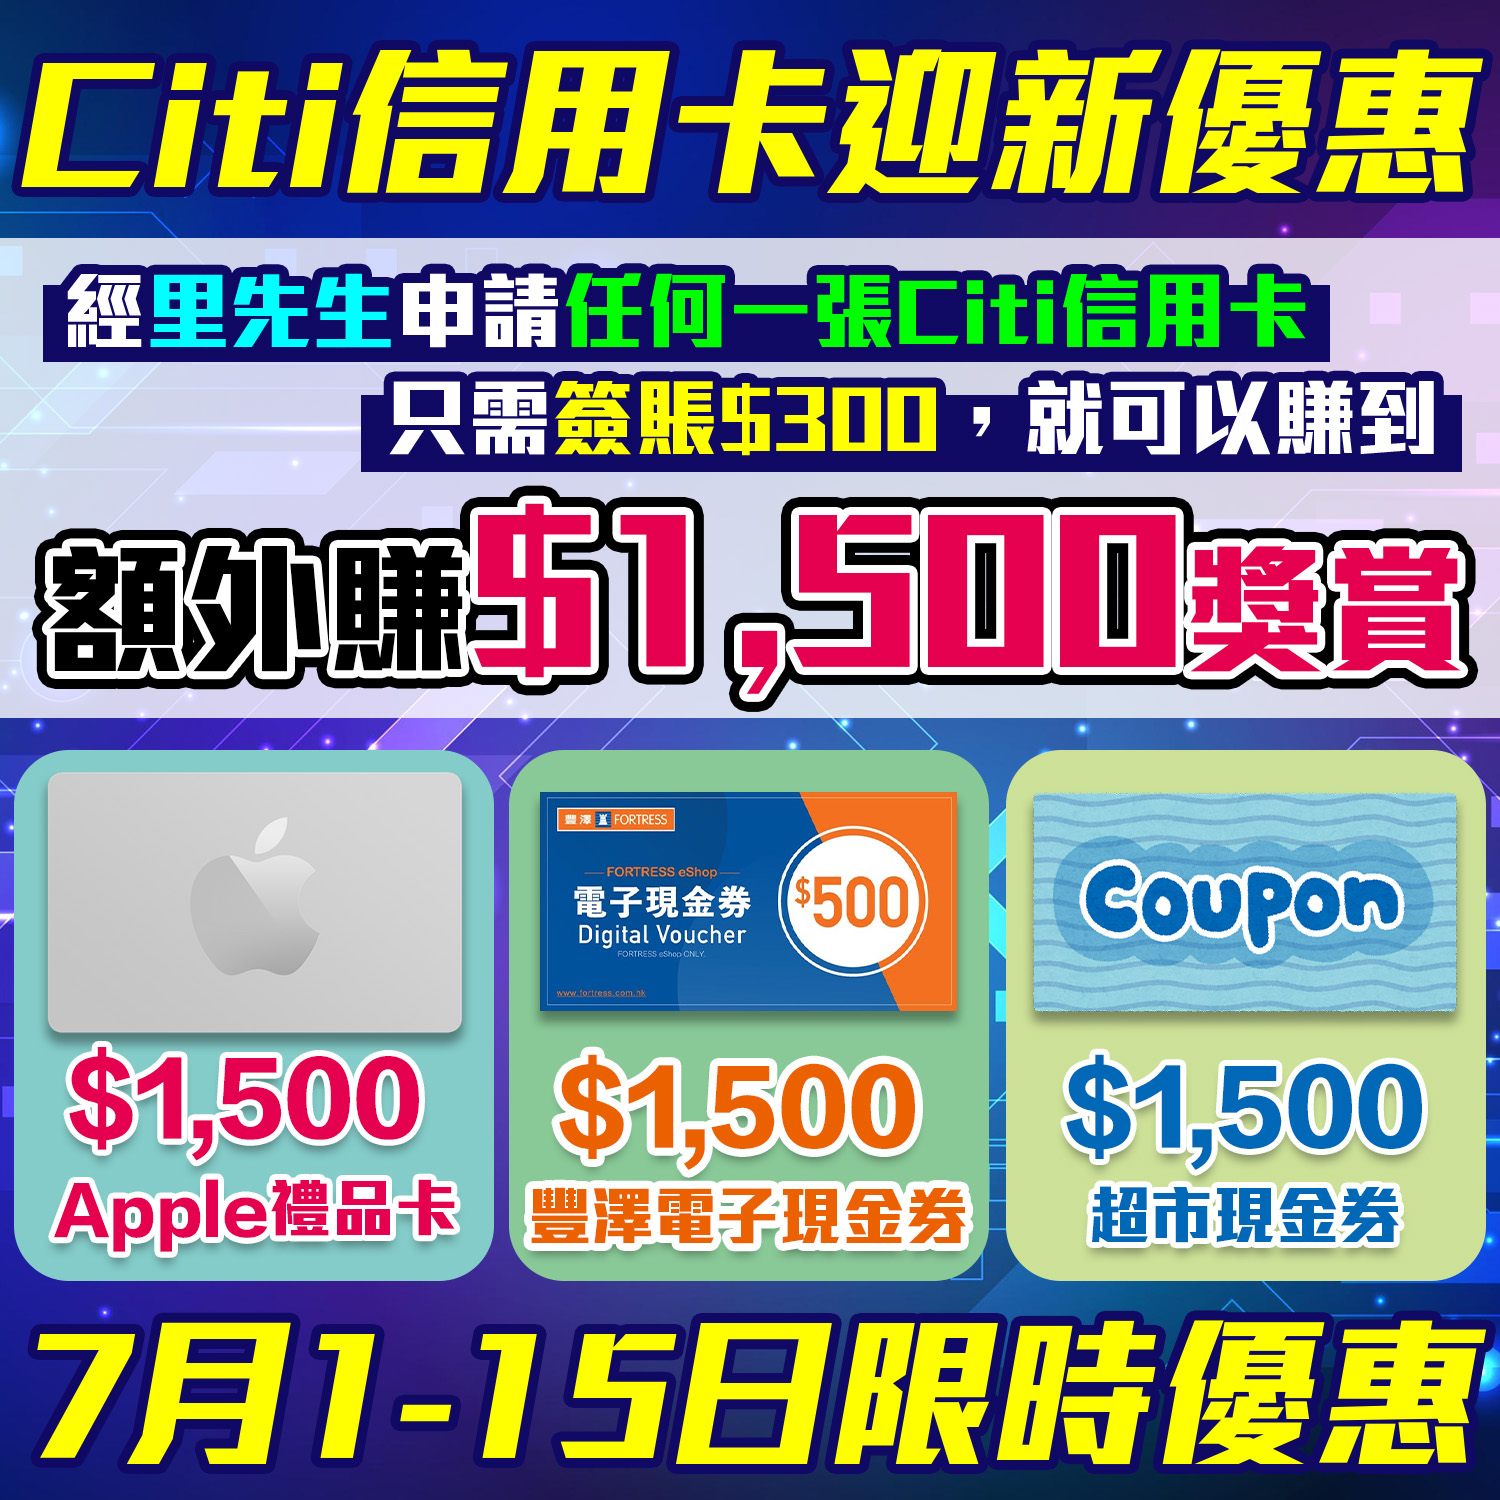 【Citi迎新送Apple Gift Card】經里先生申請Citi信用卡 簽HK$300就送 HK$1,500 Apple禮品卡！或可選擇HK$1,500 豐澤電子現金券/超市現金券